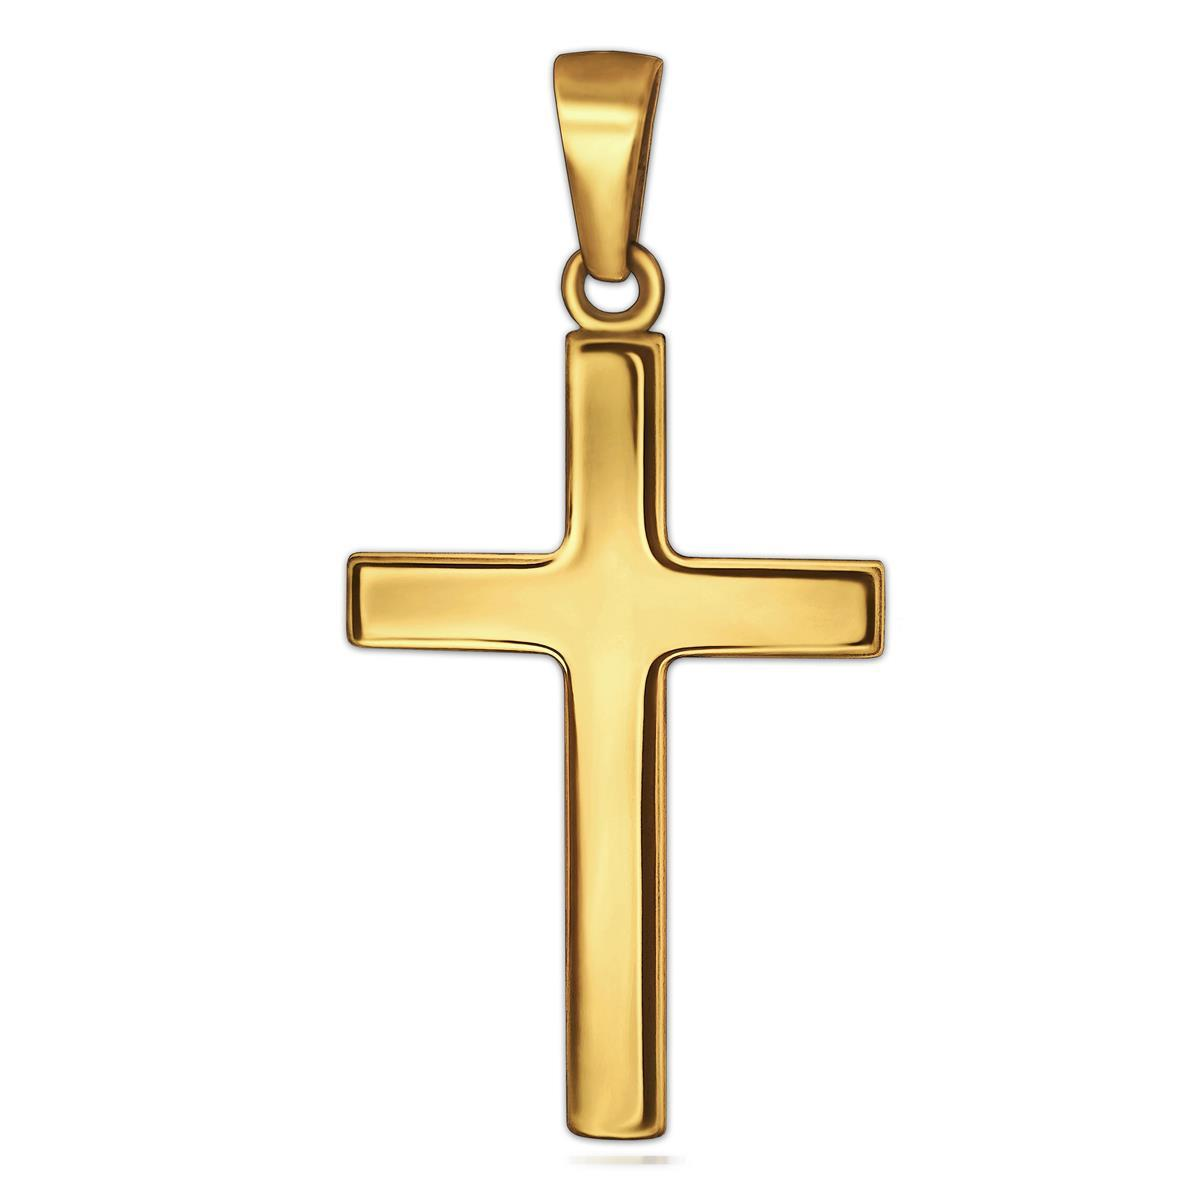 Großes Kreuz 24 mm glänzend poliert 333 Gold/Gelbgold 8 Karat